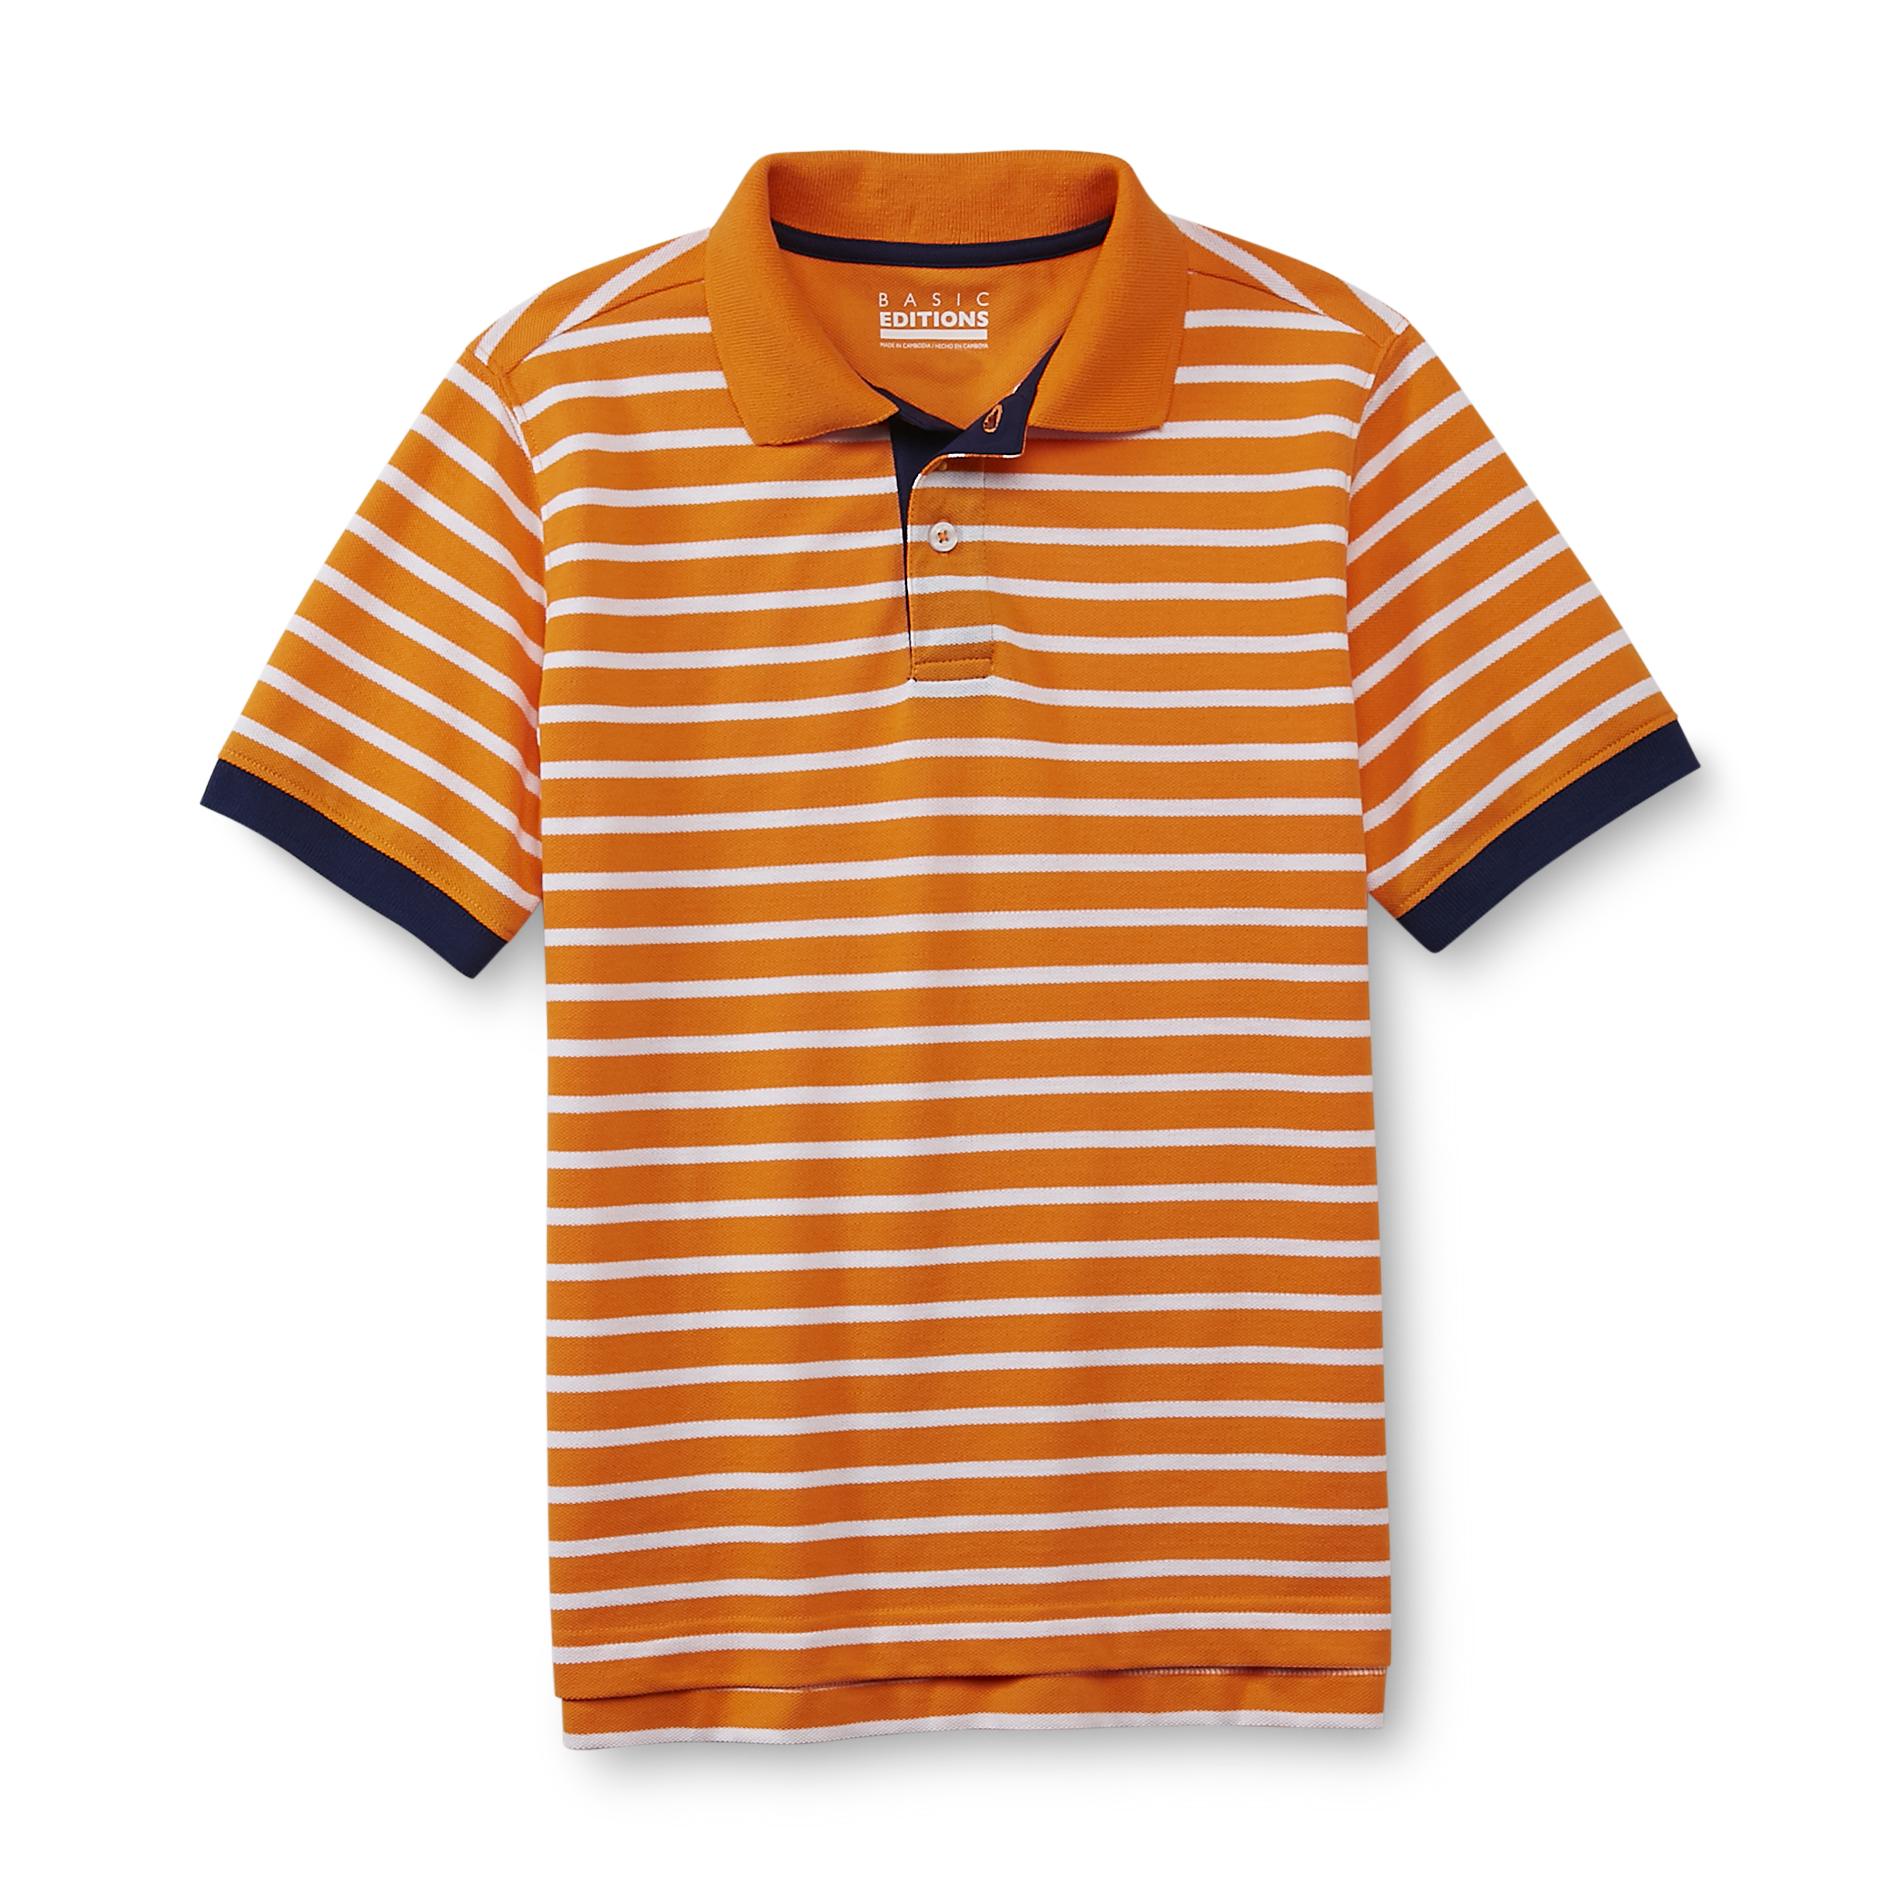 Basic Editions Boy's Polo Shirt - Striped